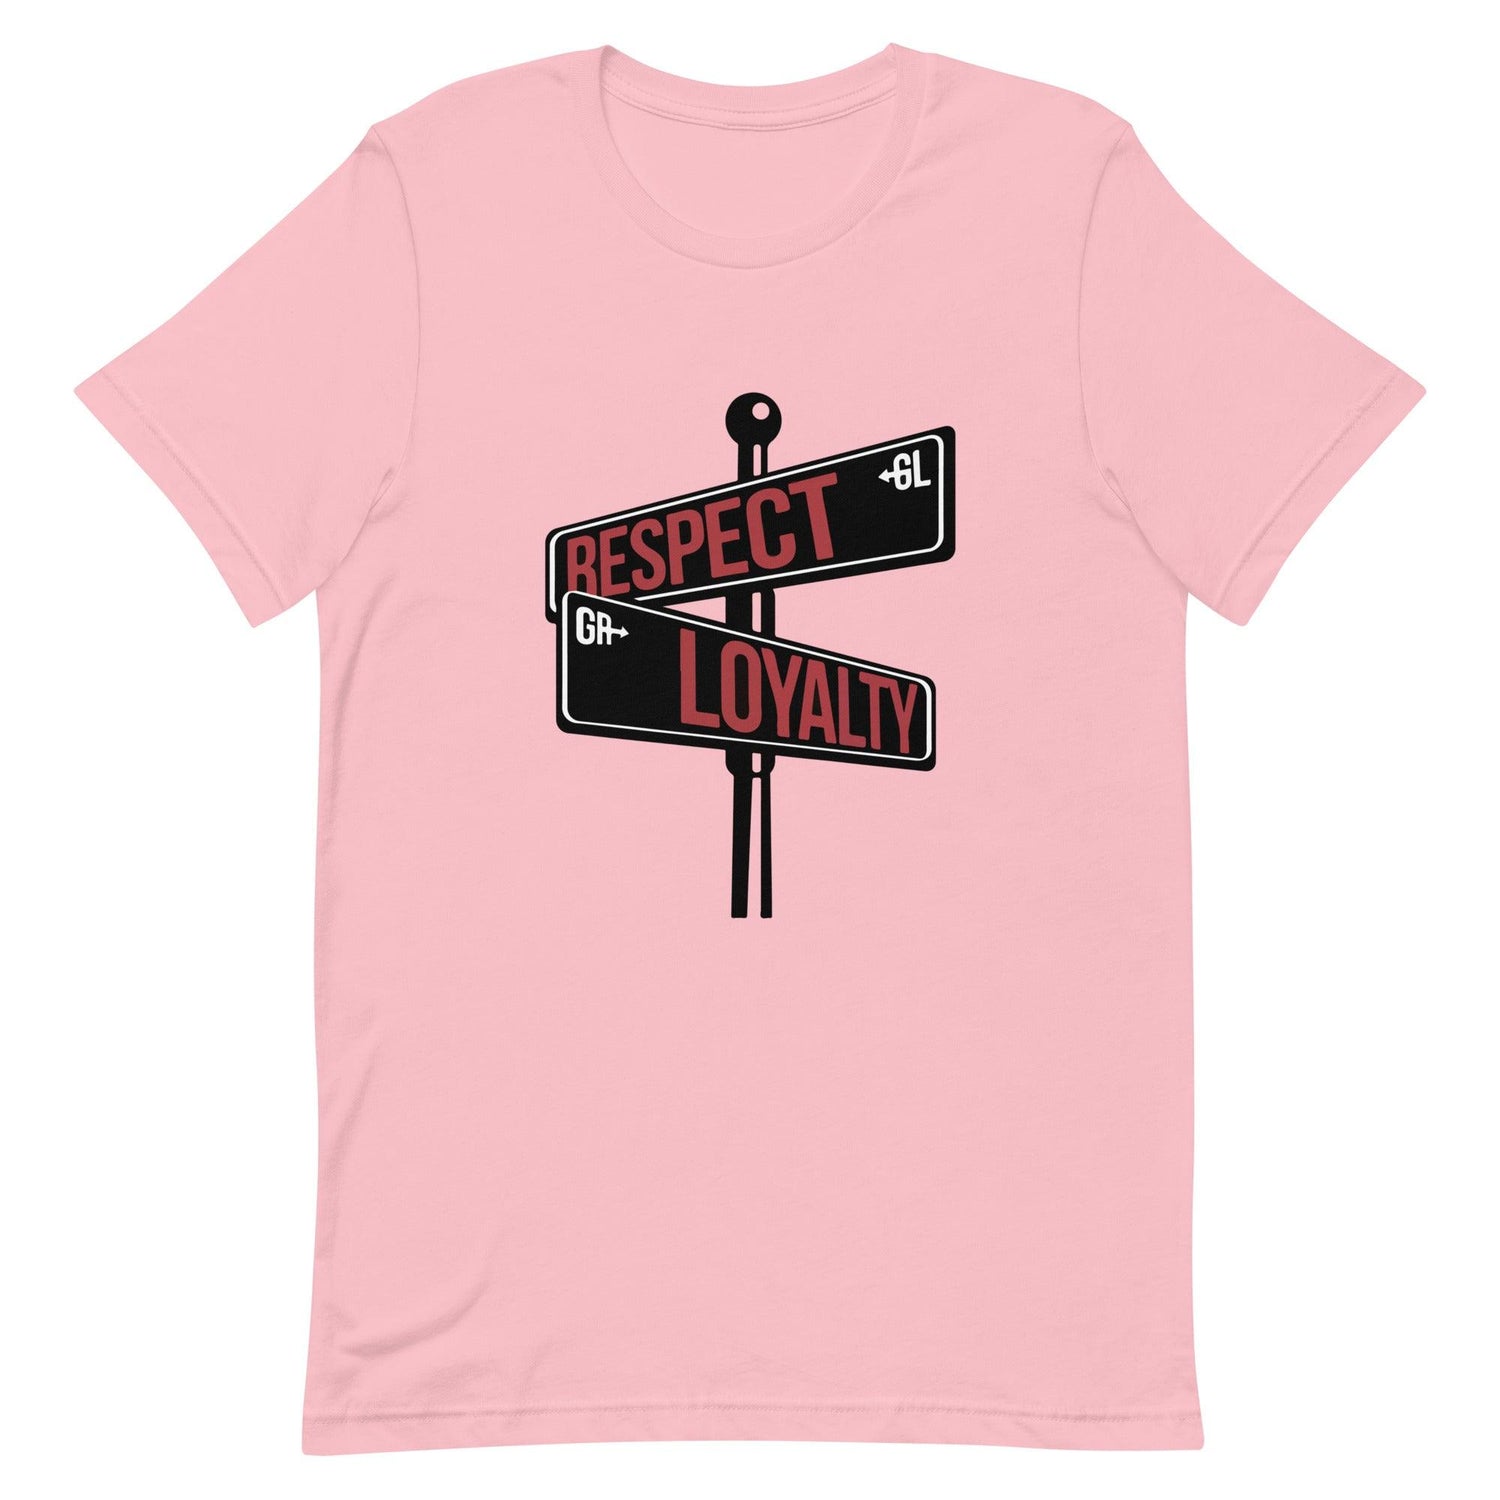 Kesean Carter "Signature" t-shirt - Fan Arch